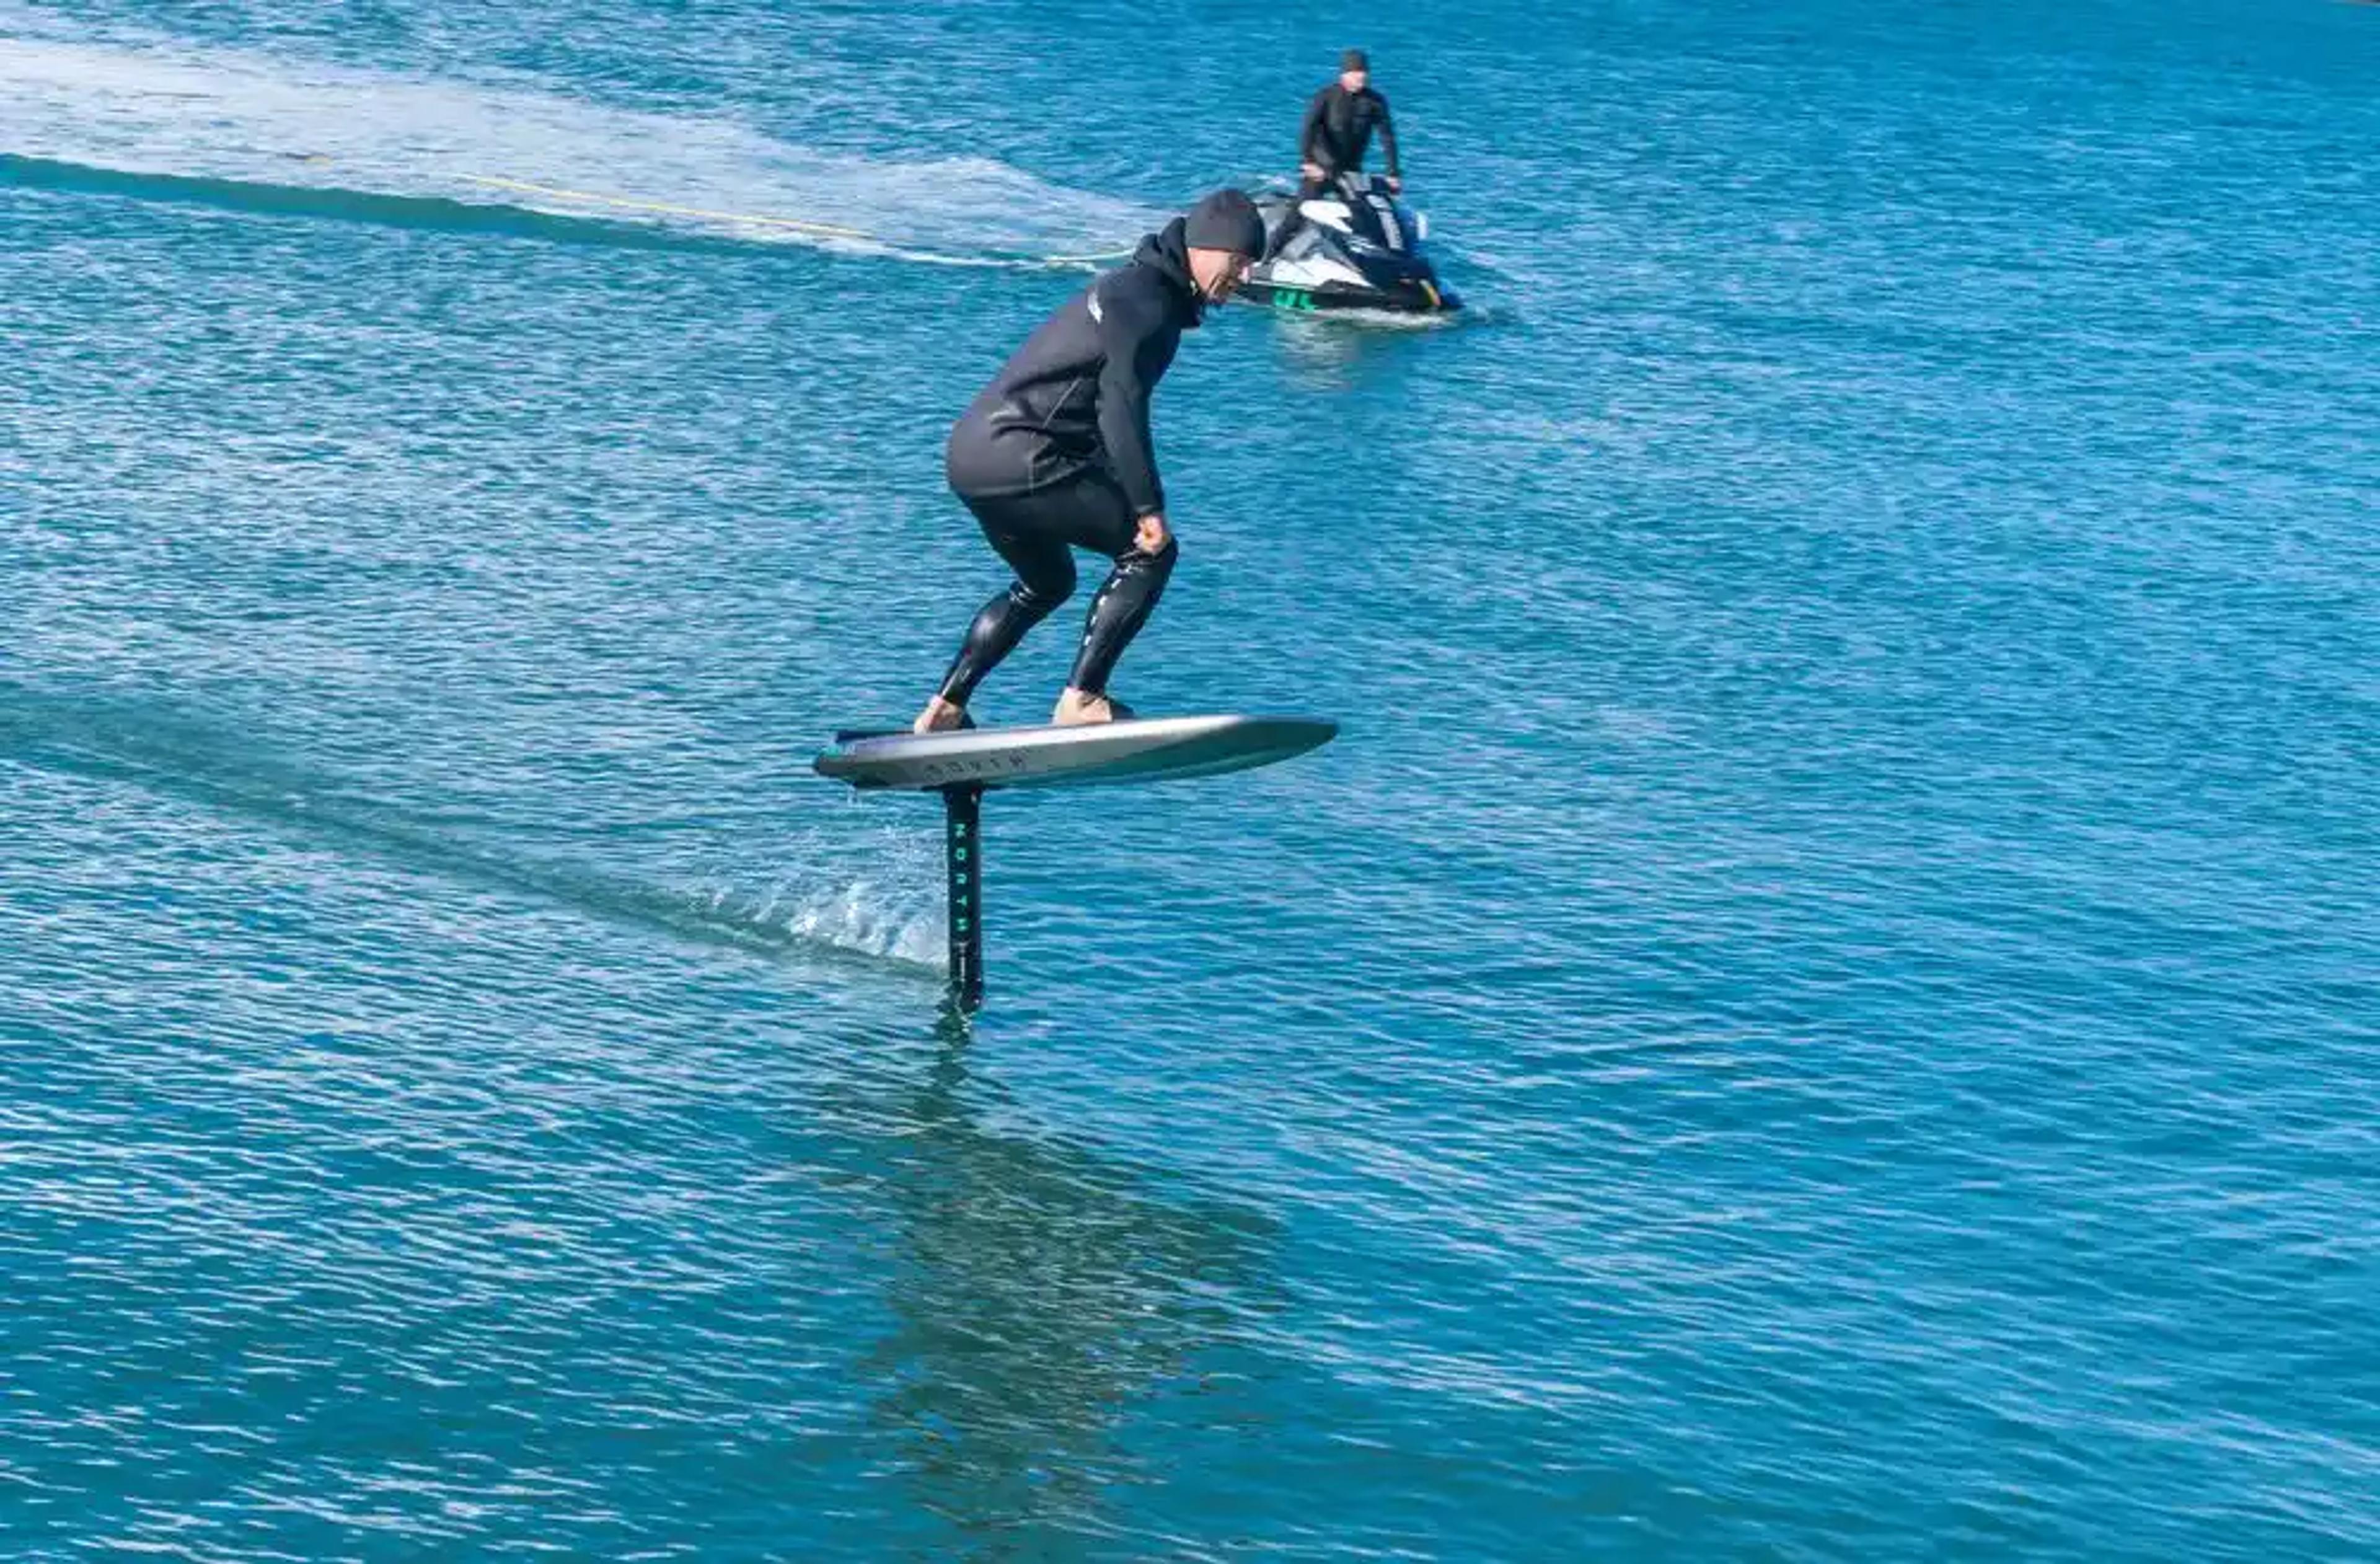 Man on electric foilboard hydrofoil surfboard